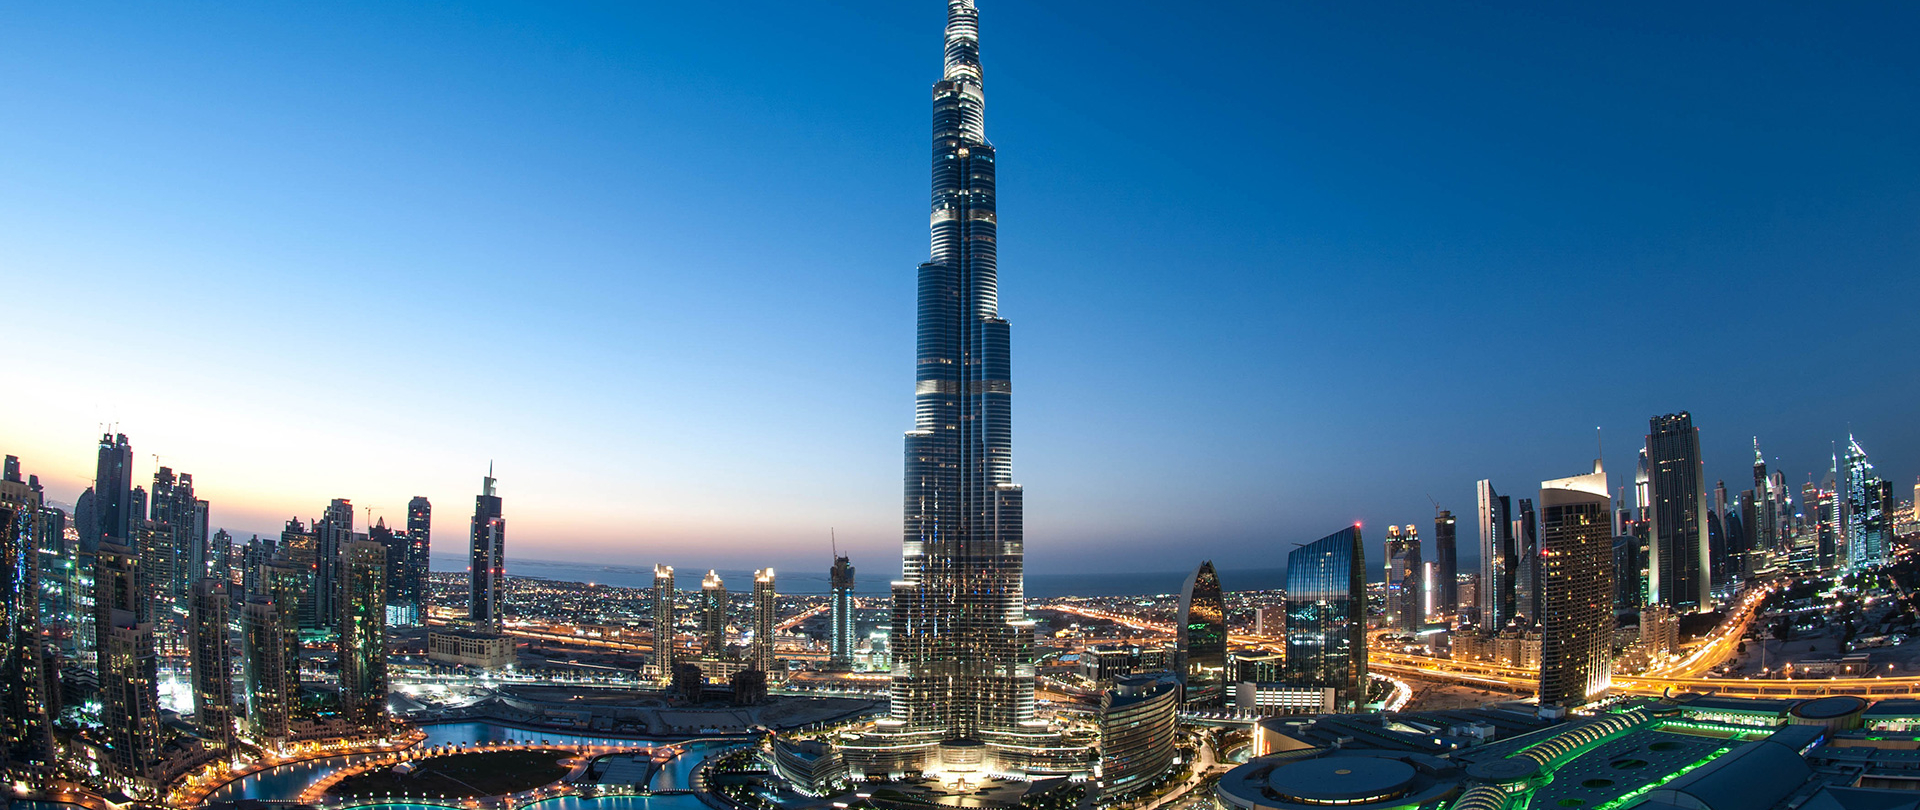 Dubai - Fantástico e Futurista